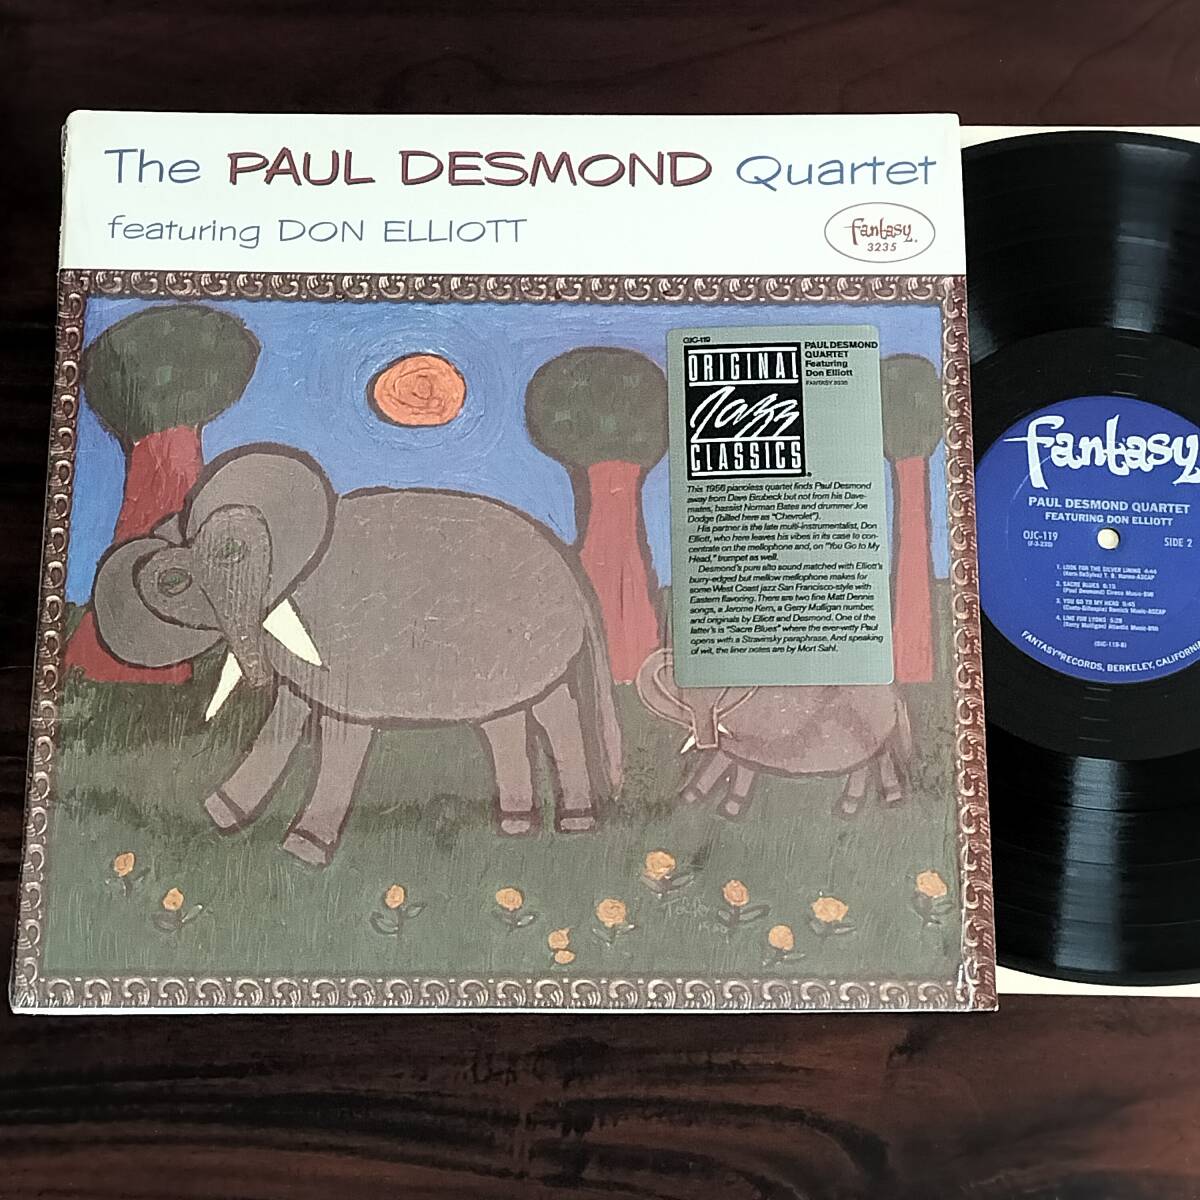 【OJC-119/F-3235】PAUL DESMOND QUARTET featuring DON ELLIOTT / FANTASY / シュリンク付 / US盤 / LP_画像1